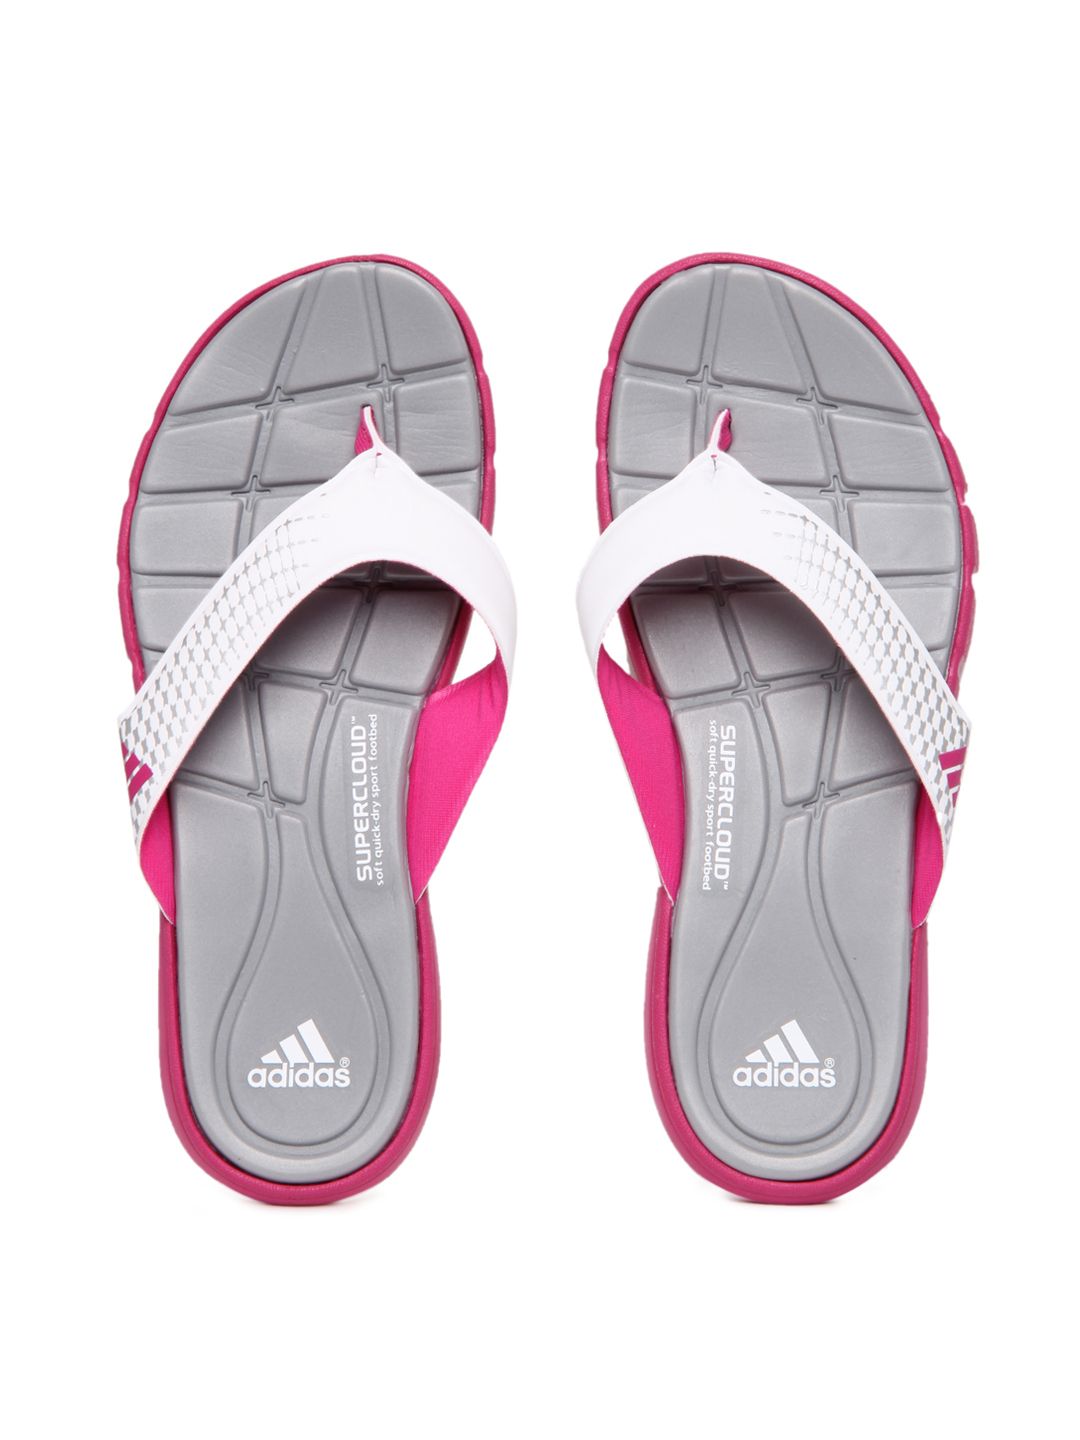 adidas female slippers